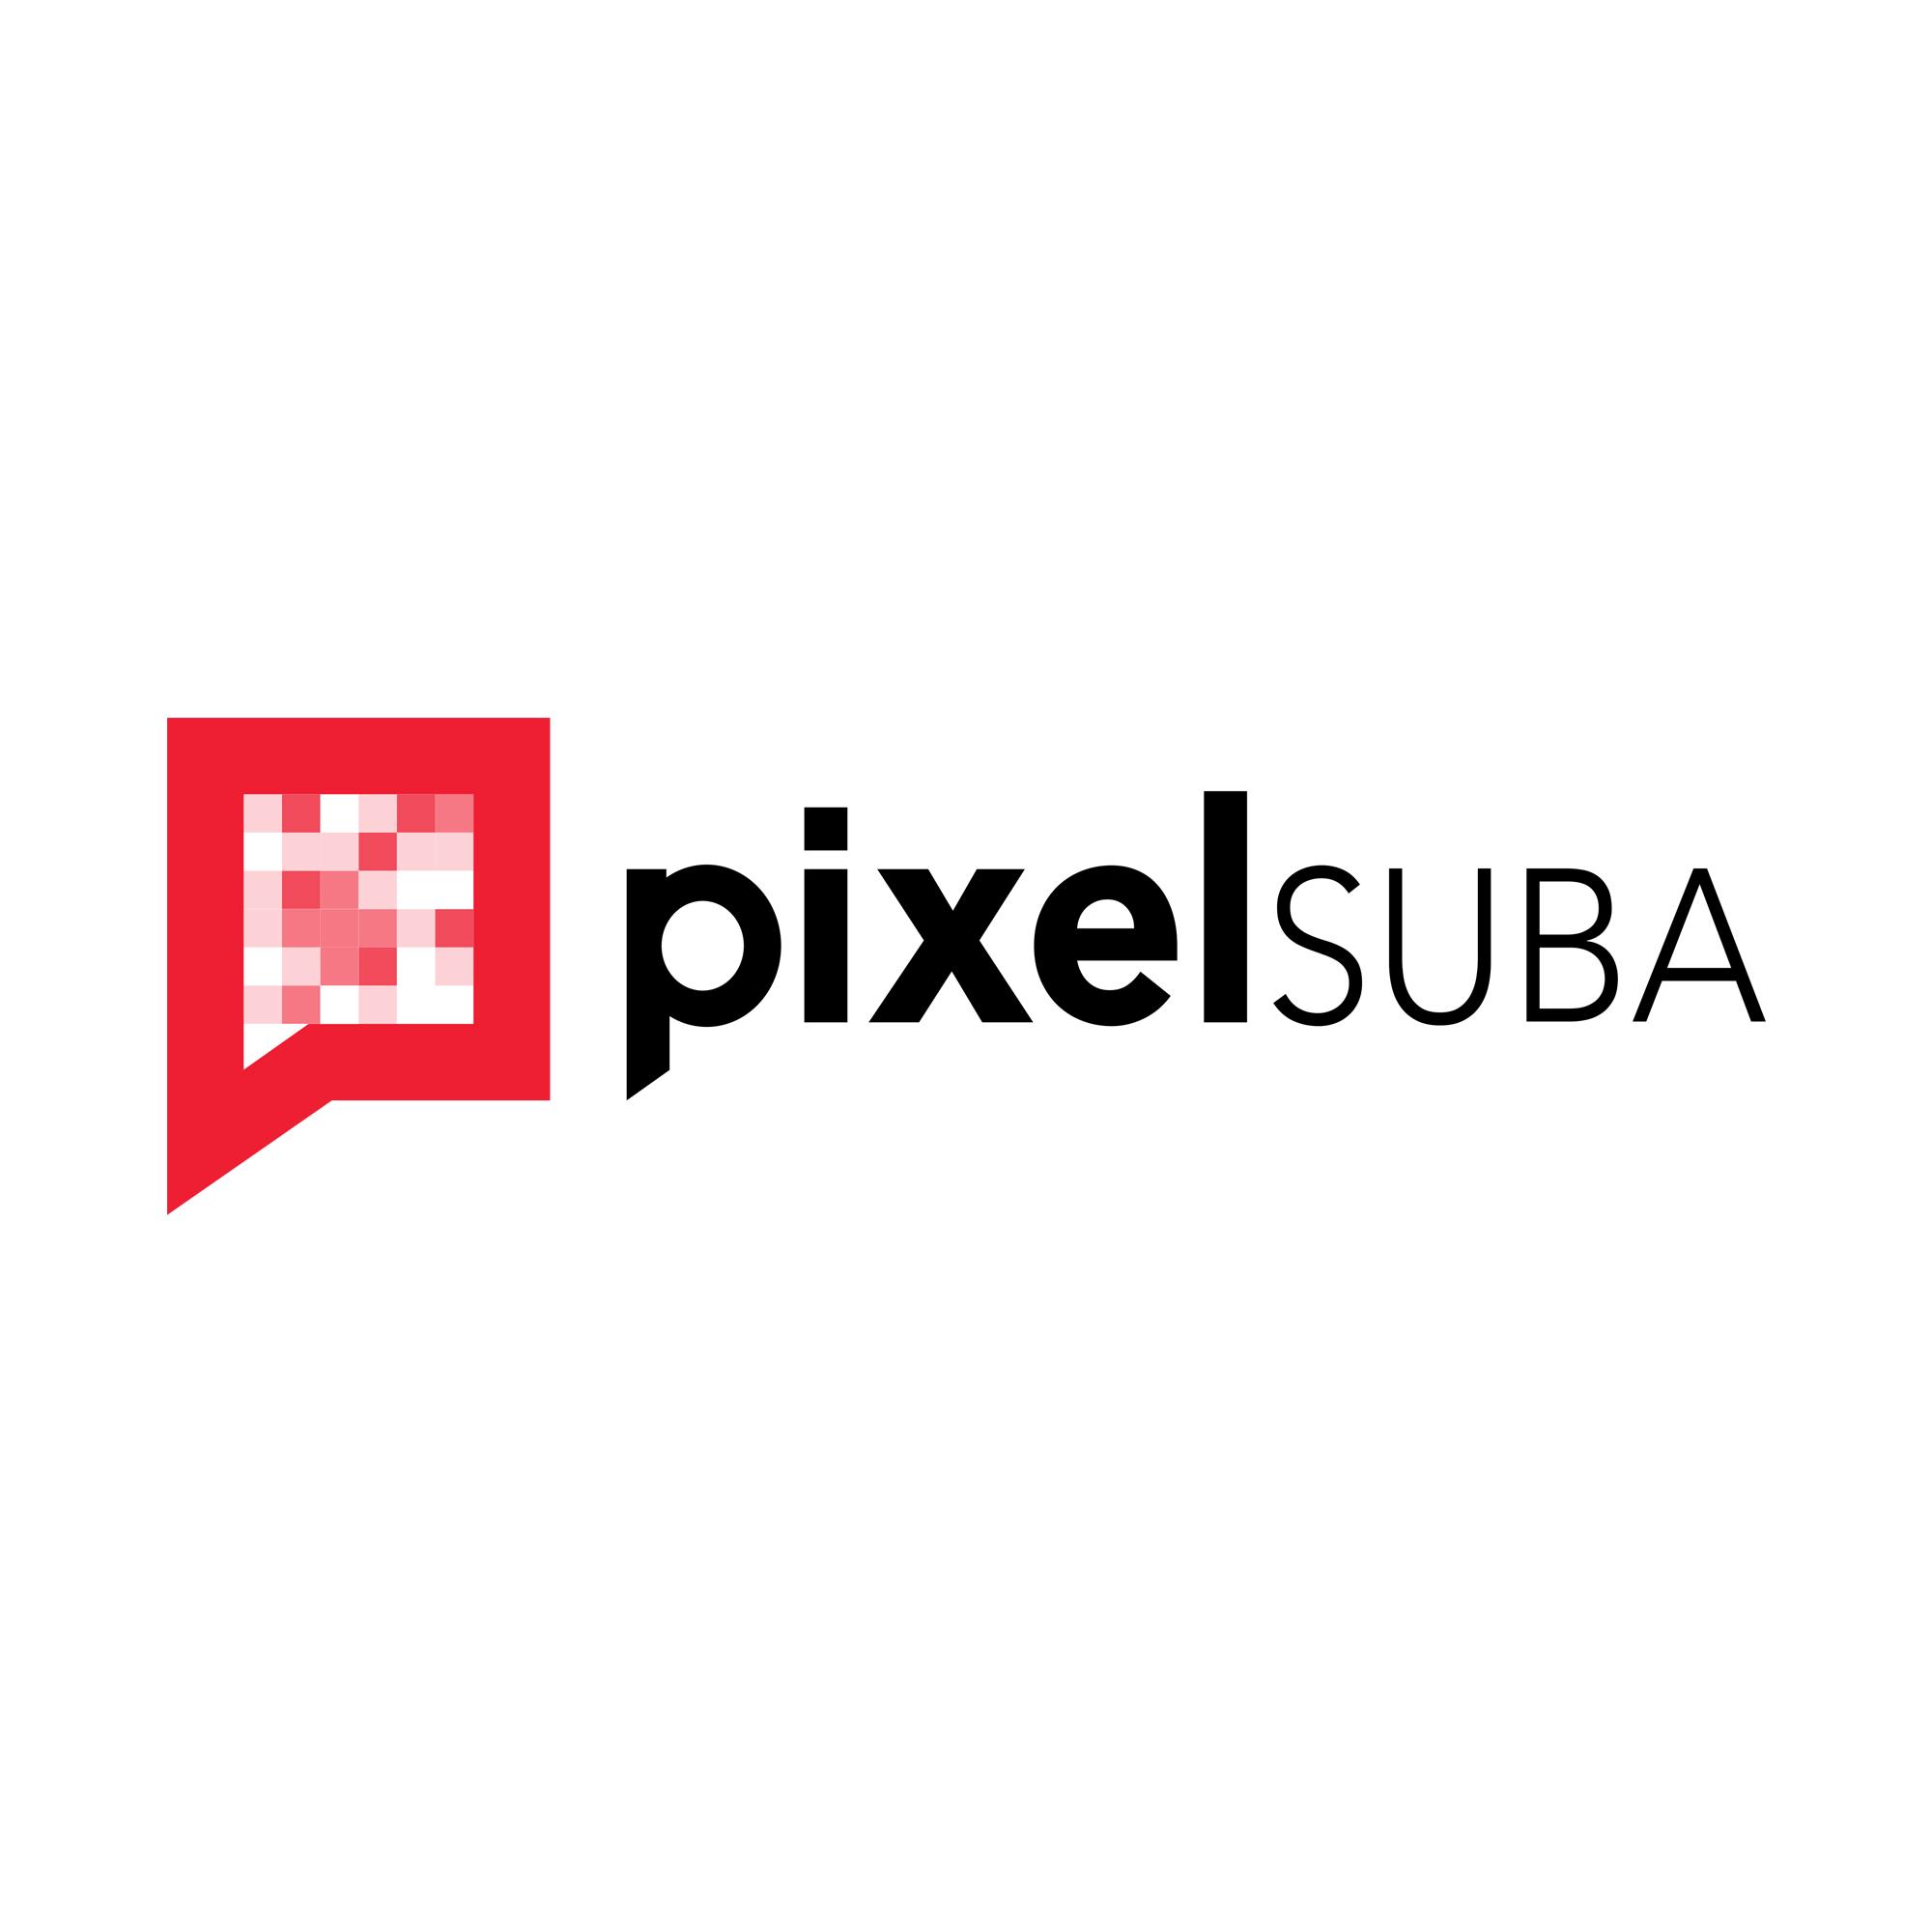 Pixel Suba Digital Marketing Agency profile on Qualified.One